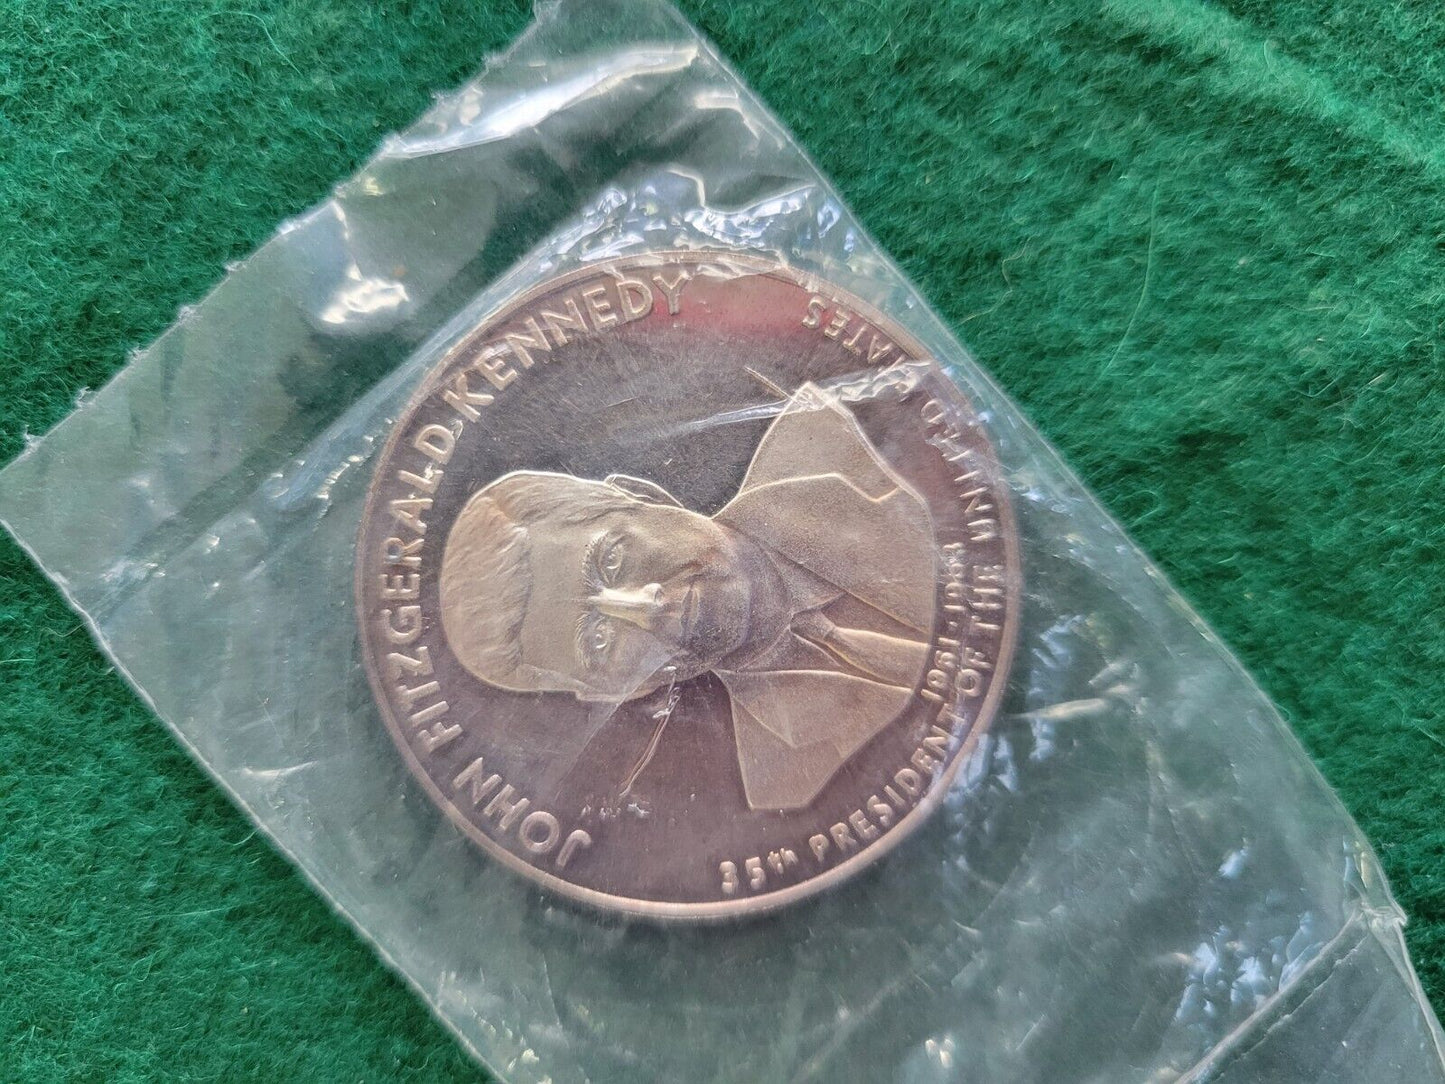 1964 John Fitzgerald Kennedy In Memoriam .999 Fine Silver Medal Set 1.8oz troy